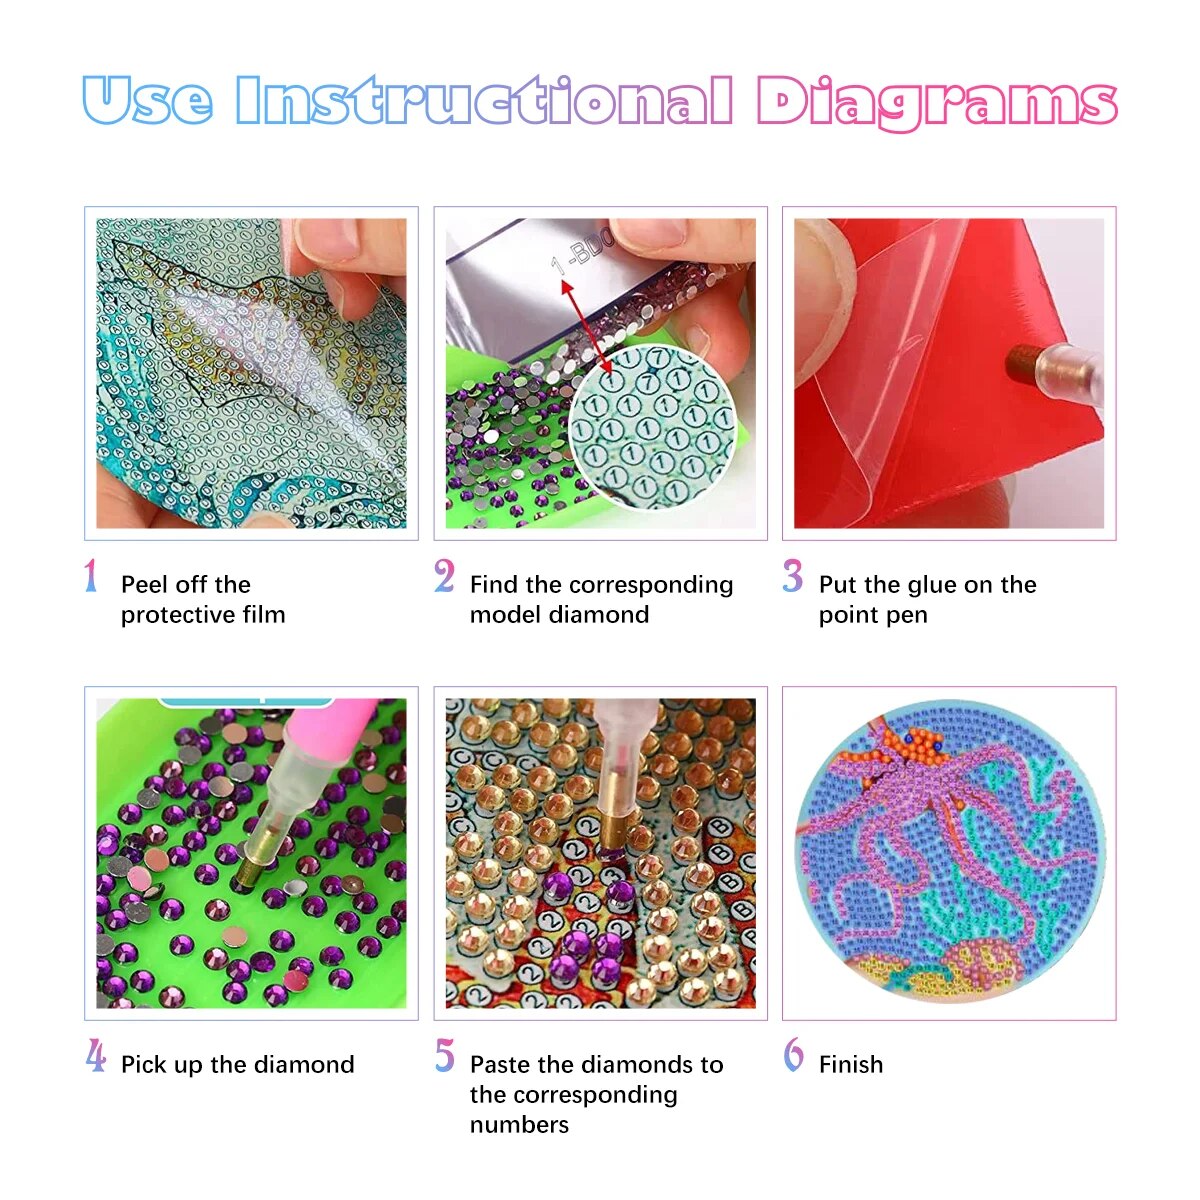 6pc Diamond Painting Coasters Kits With Holder - Vibrant Mandalas